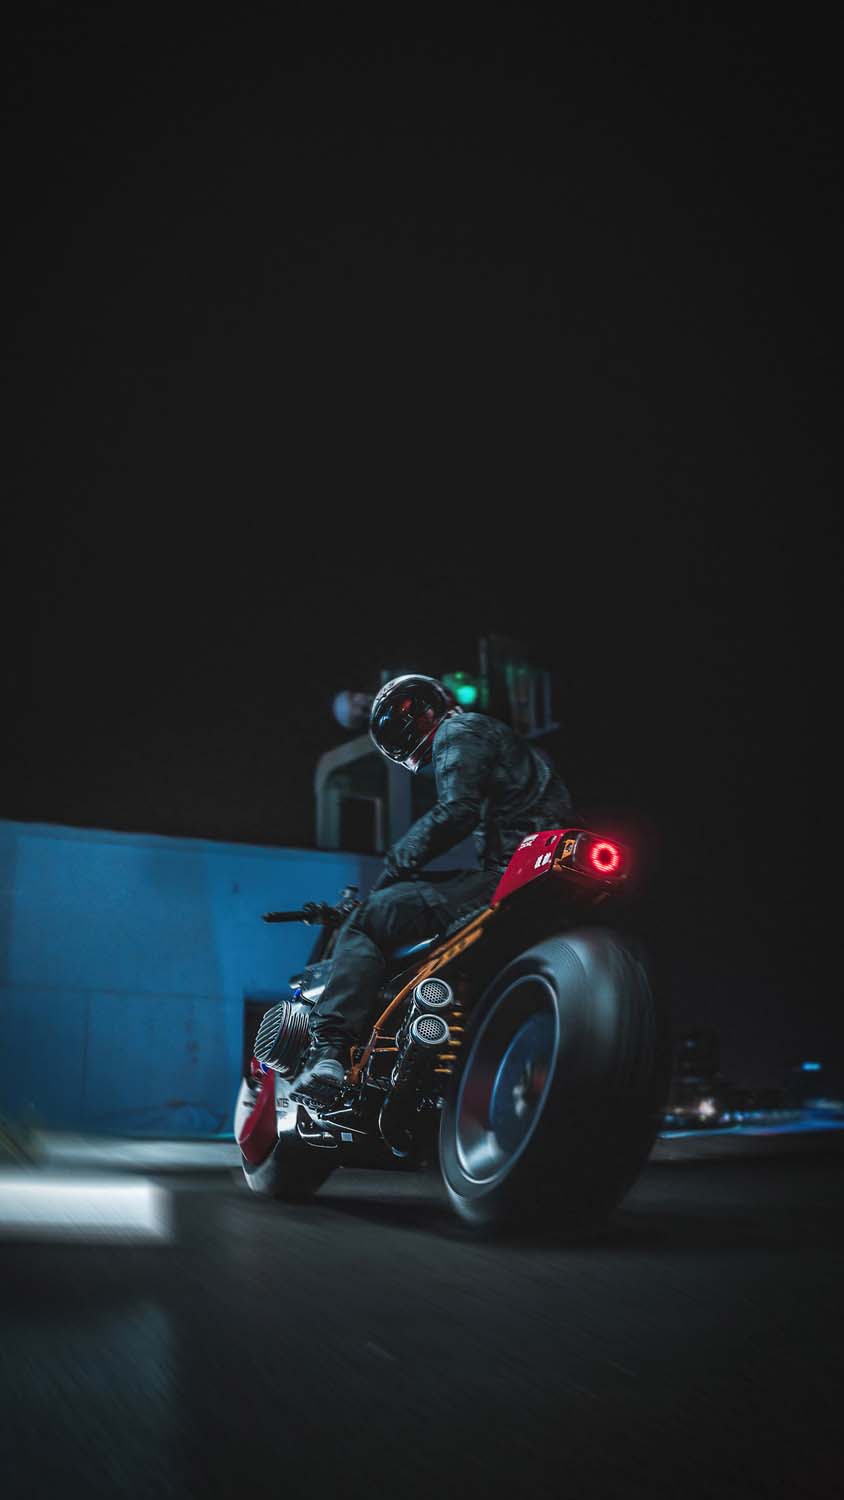 Motor Biker of Scifi World iPhone Wallpaper HD